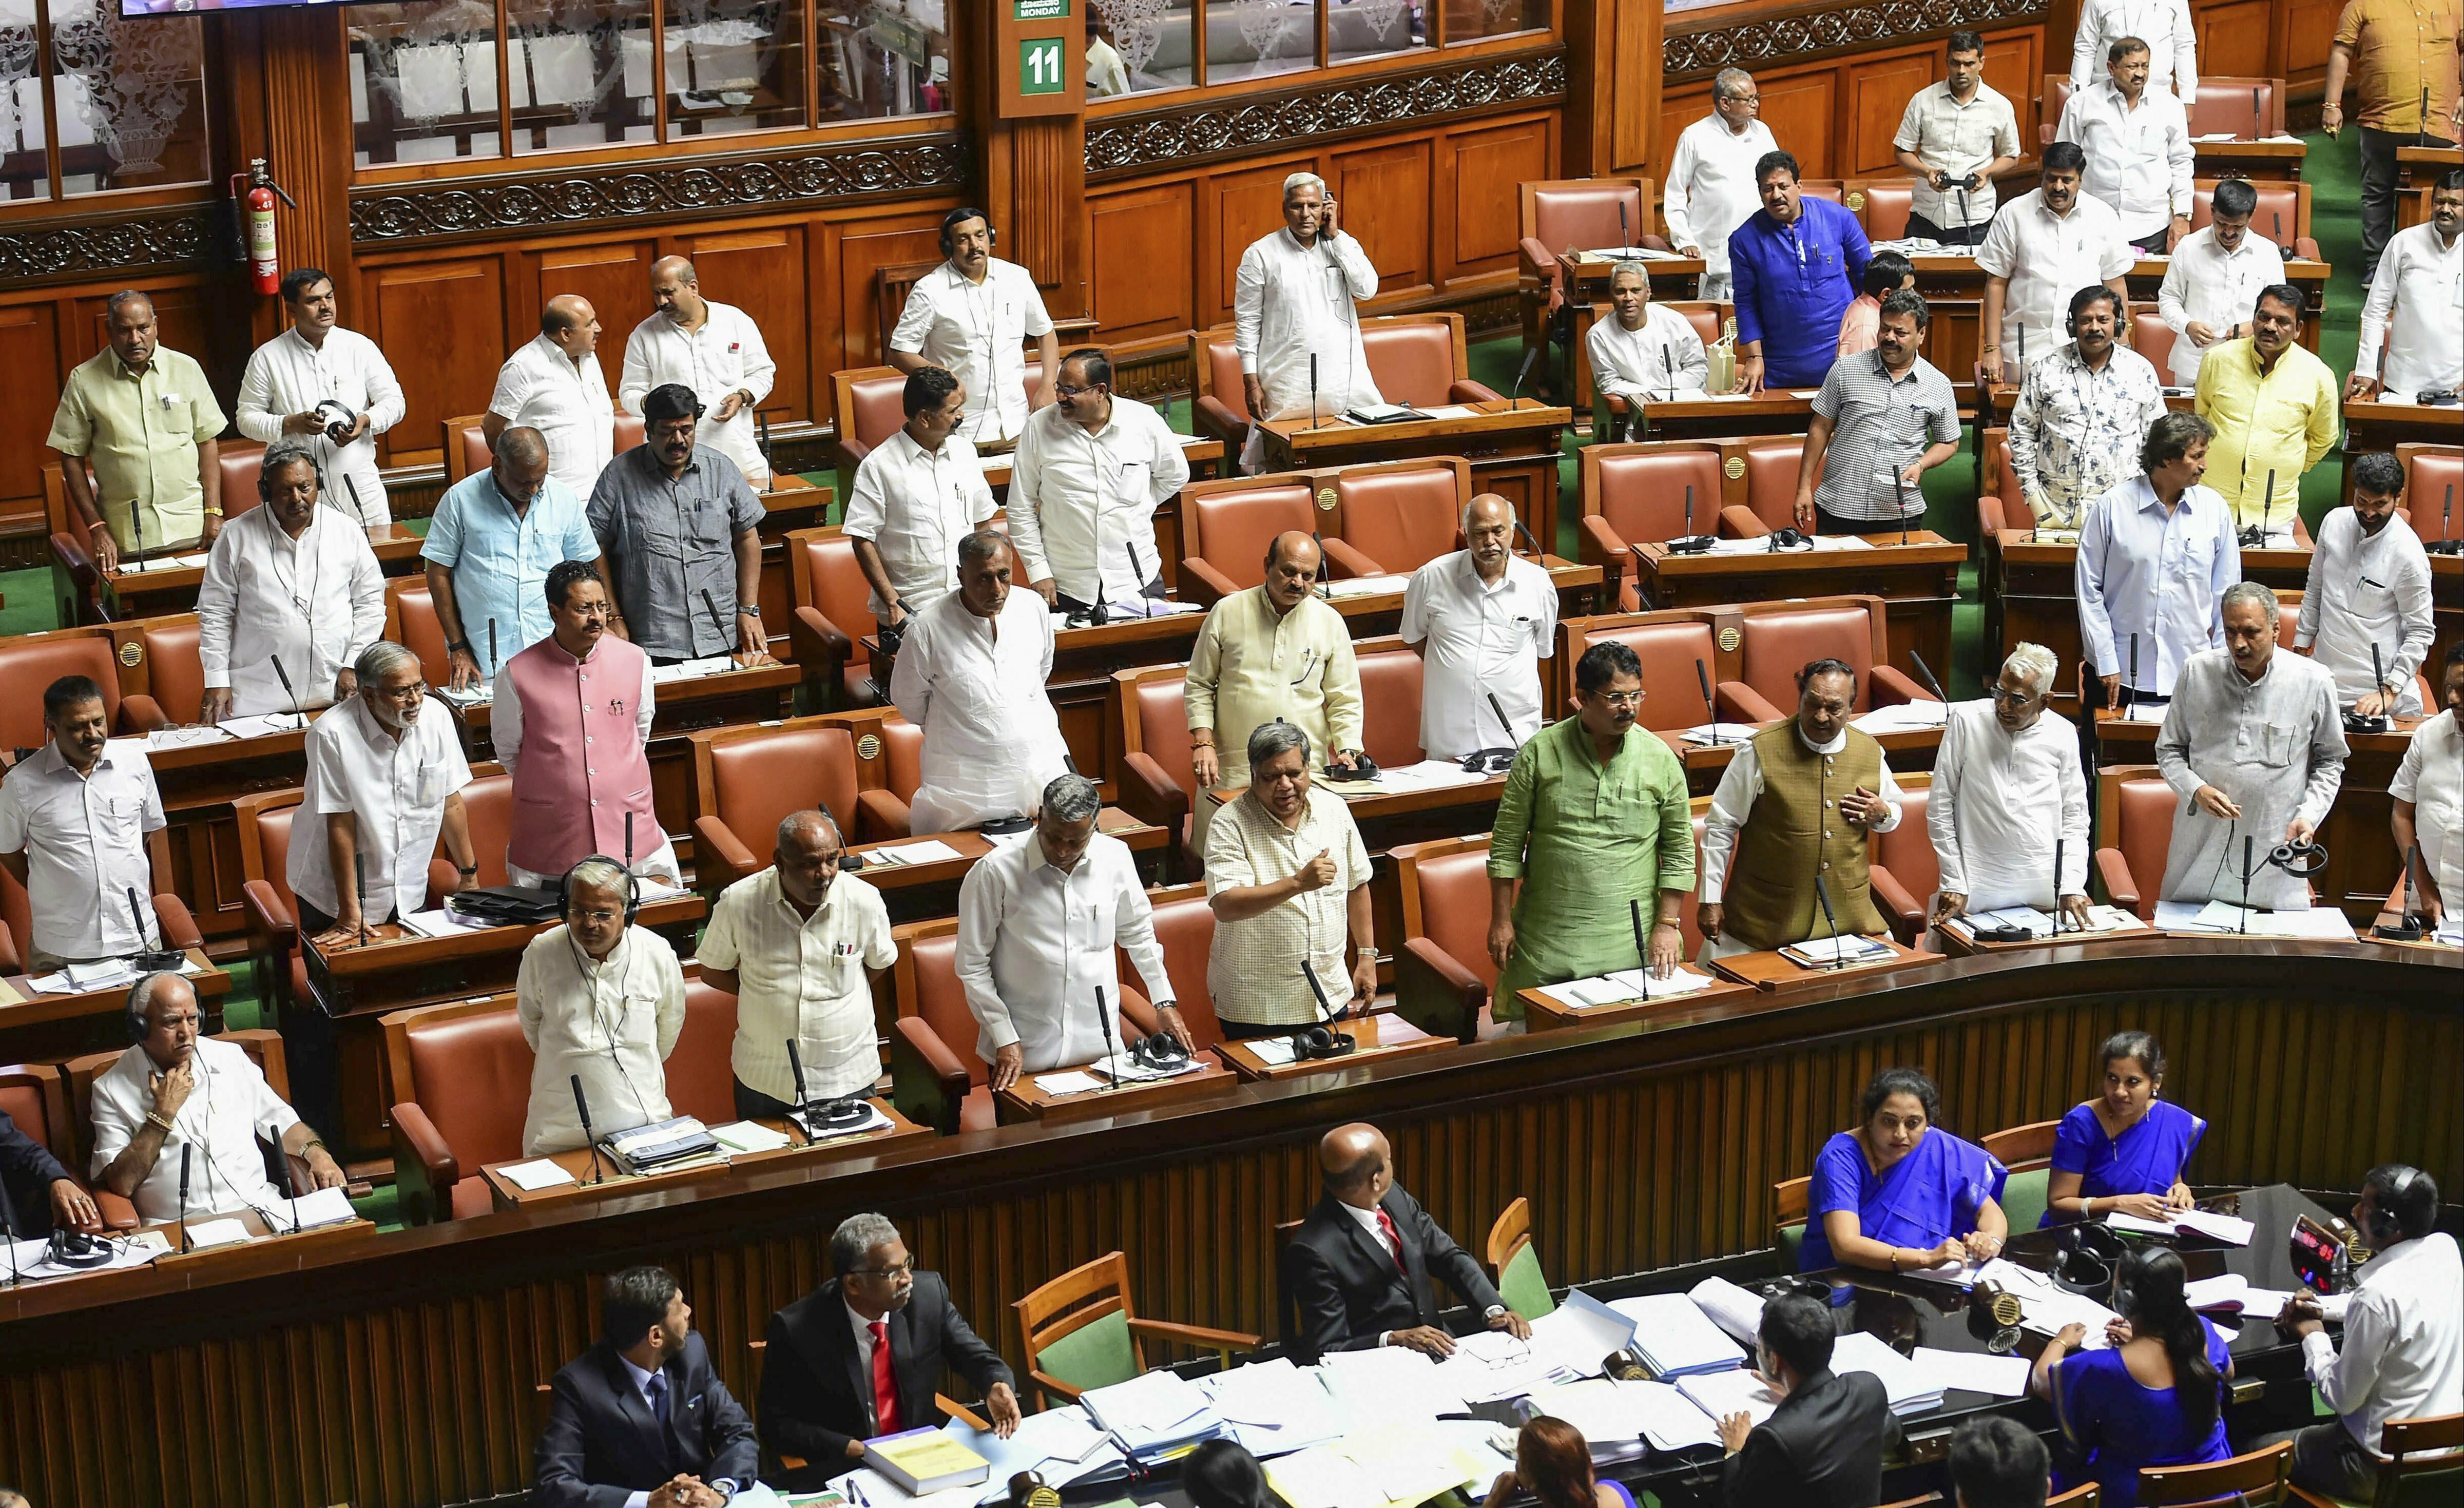 BJP Karnataka chief BS Yeddyurappa with his party MLA's disrupt the proceedings during the budget session at Vidhana Soudha, in Bengaluru - PTI